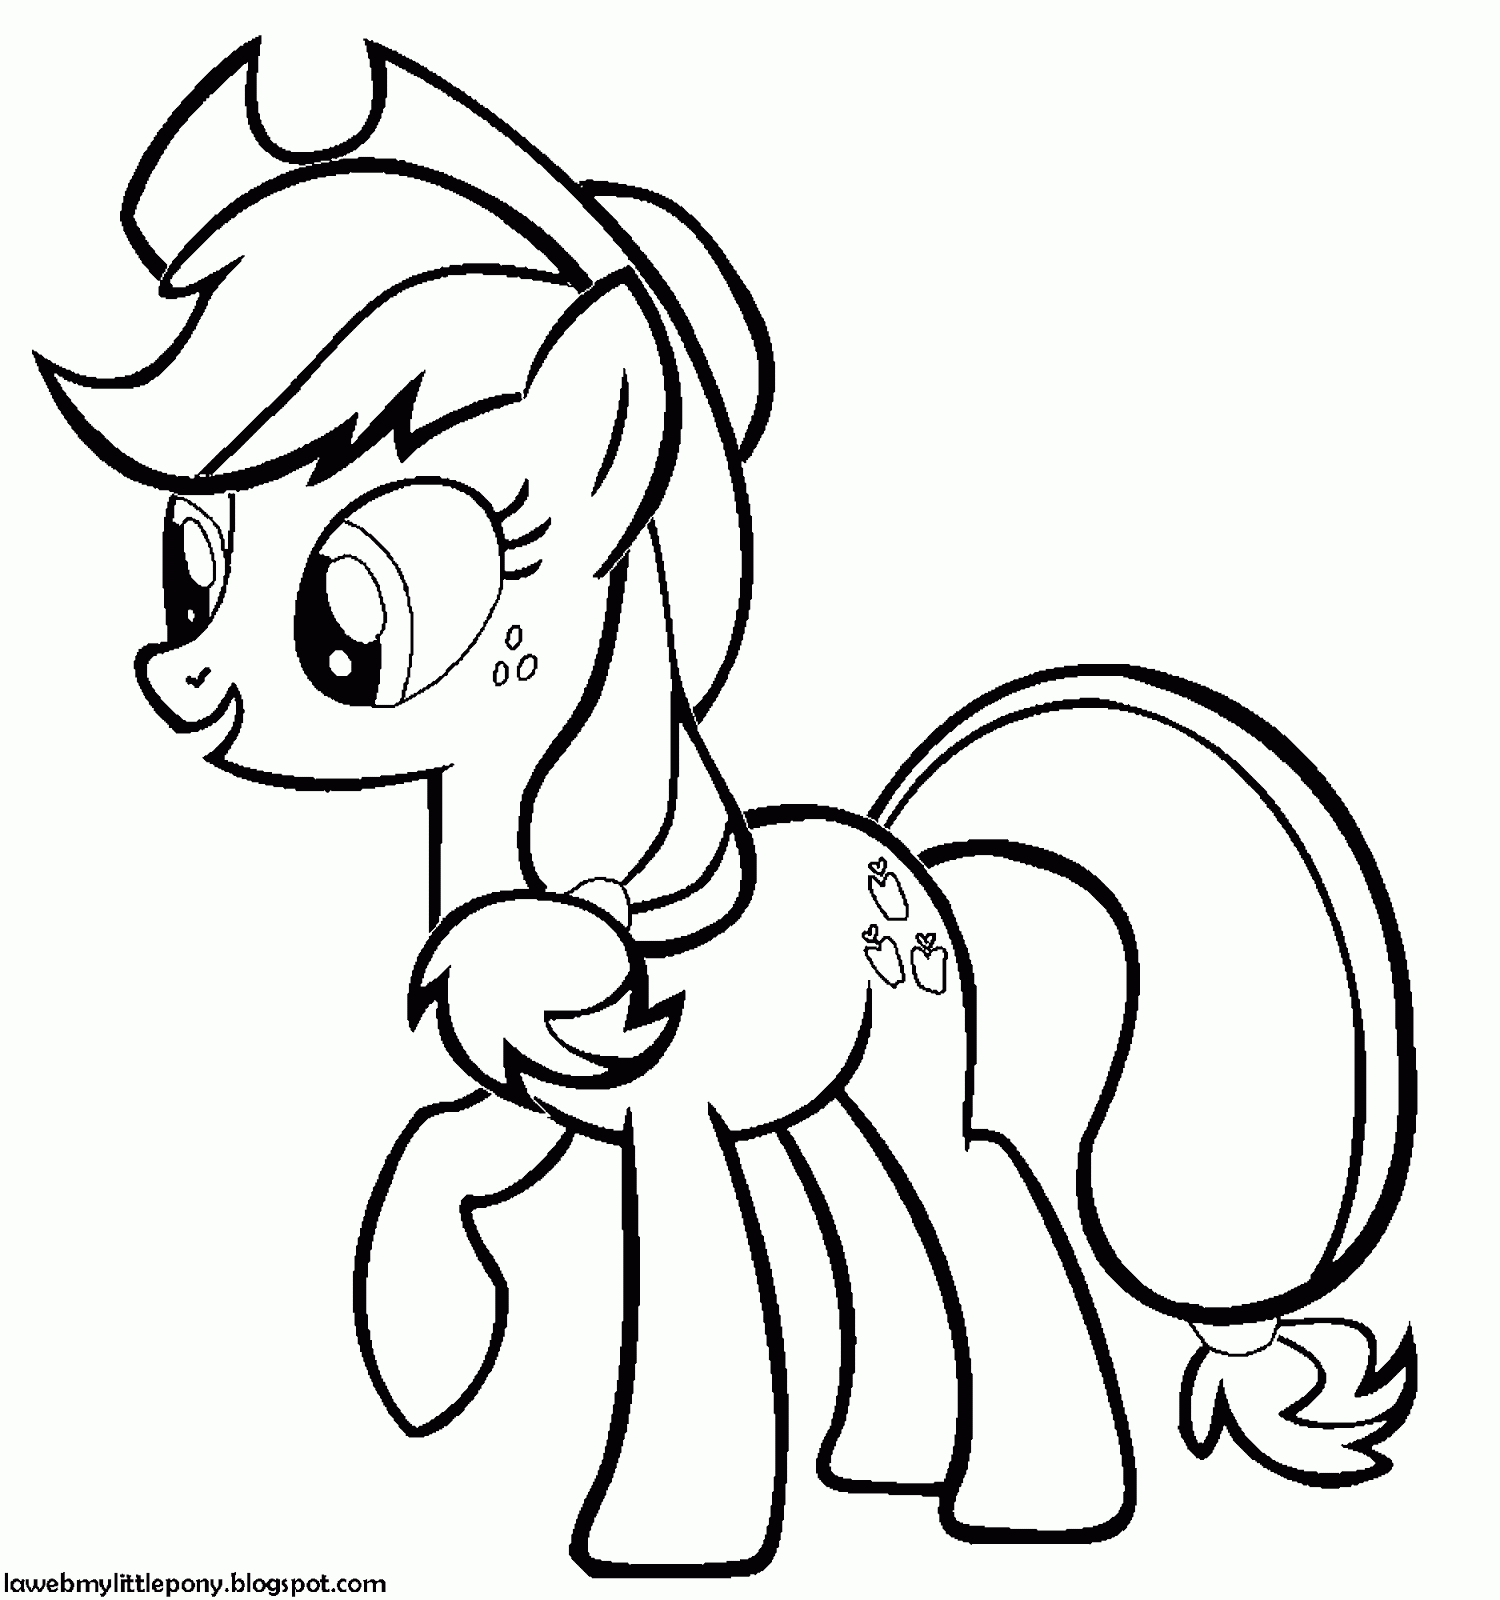 My Little Pony: Dibujos para colorear de Applejack de My Little Pony